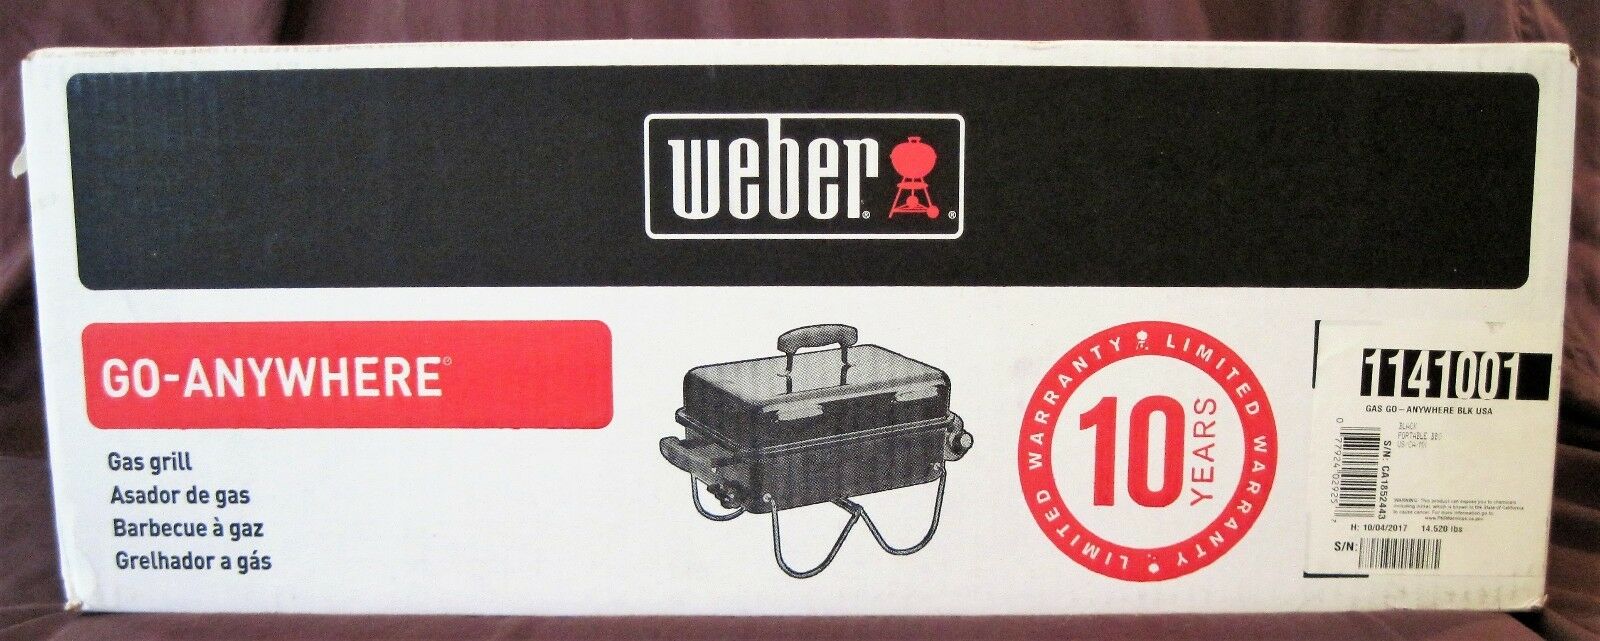 Weber Go Anywhere Gas Grill 1141001